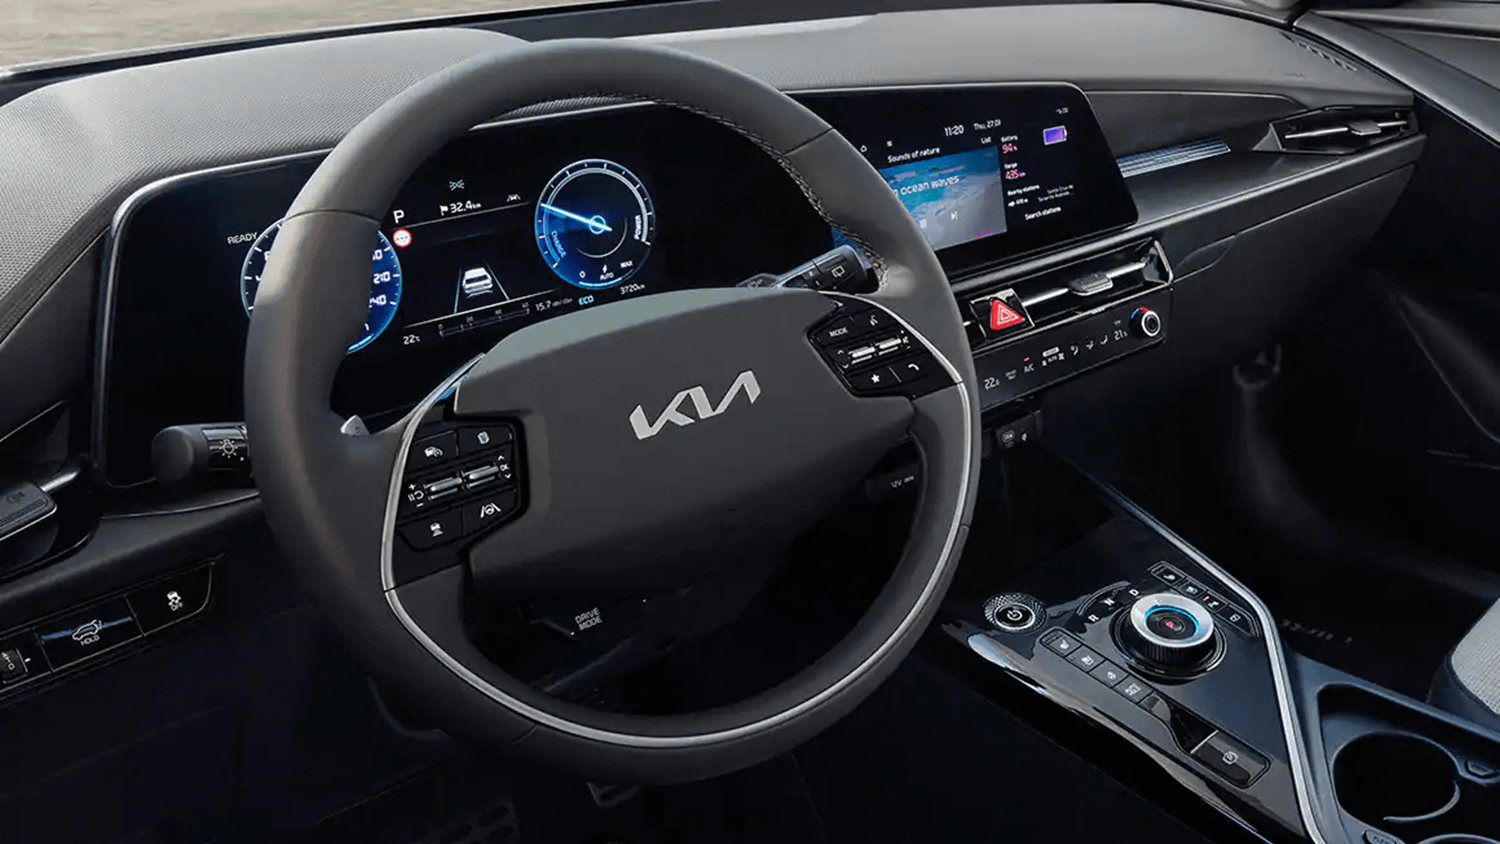 Kia Niro exterior - steering wheel and dashboard